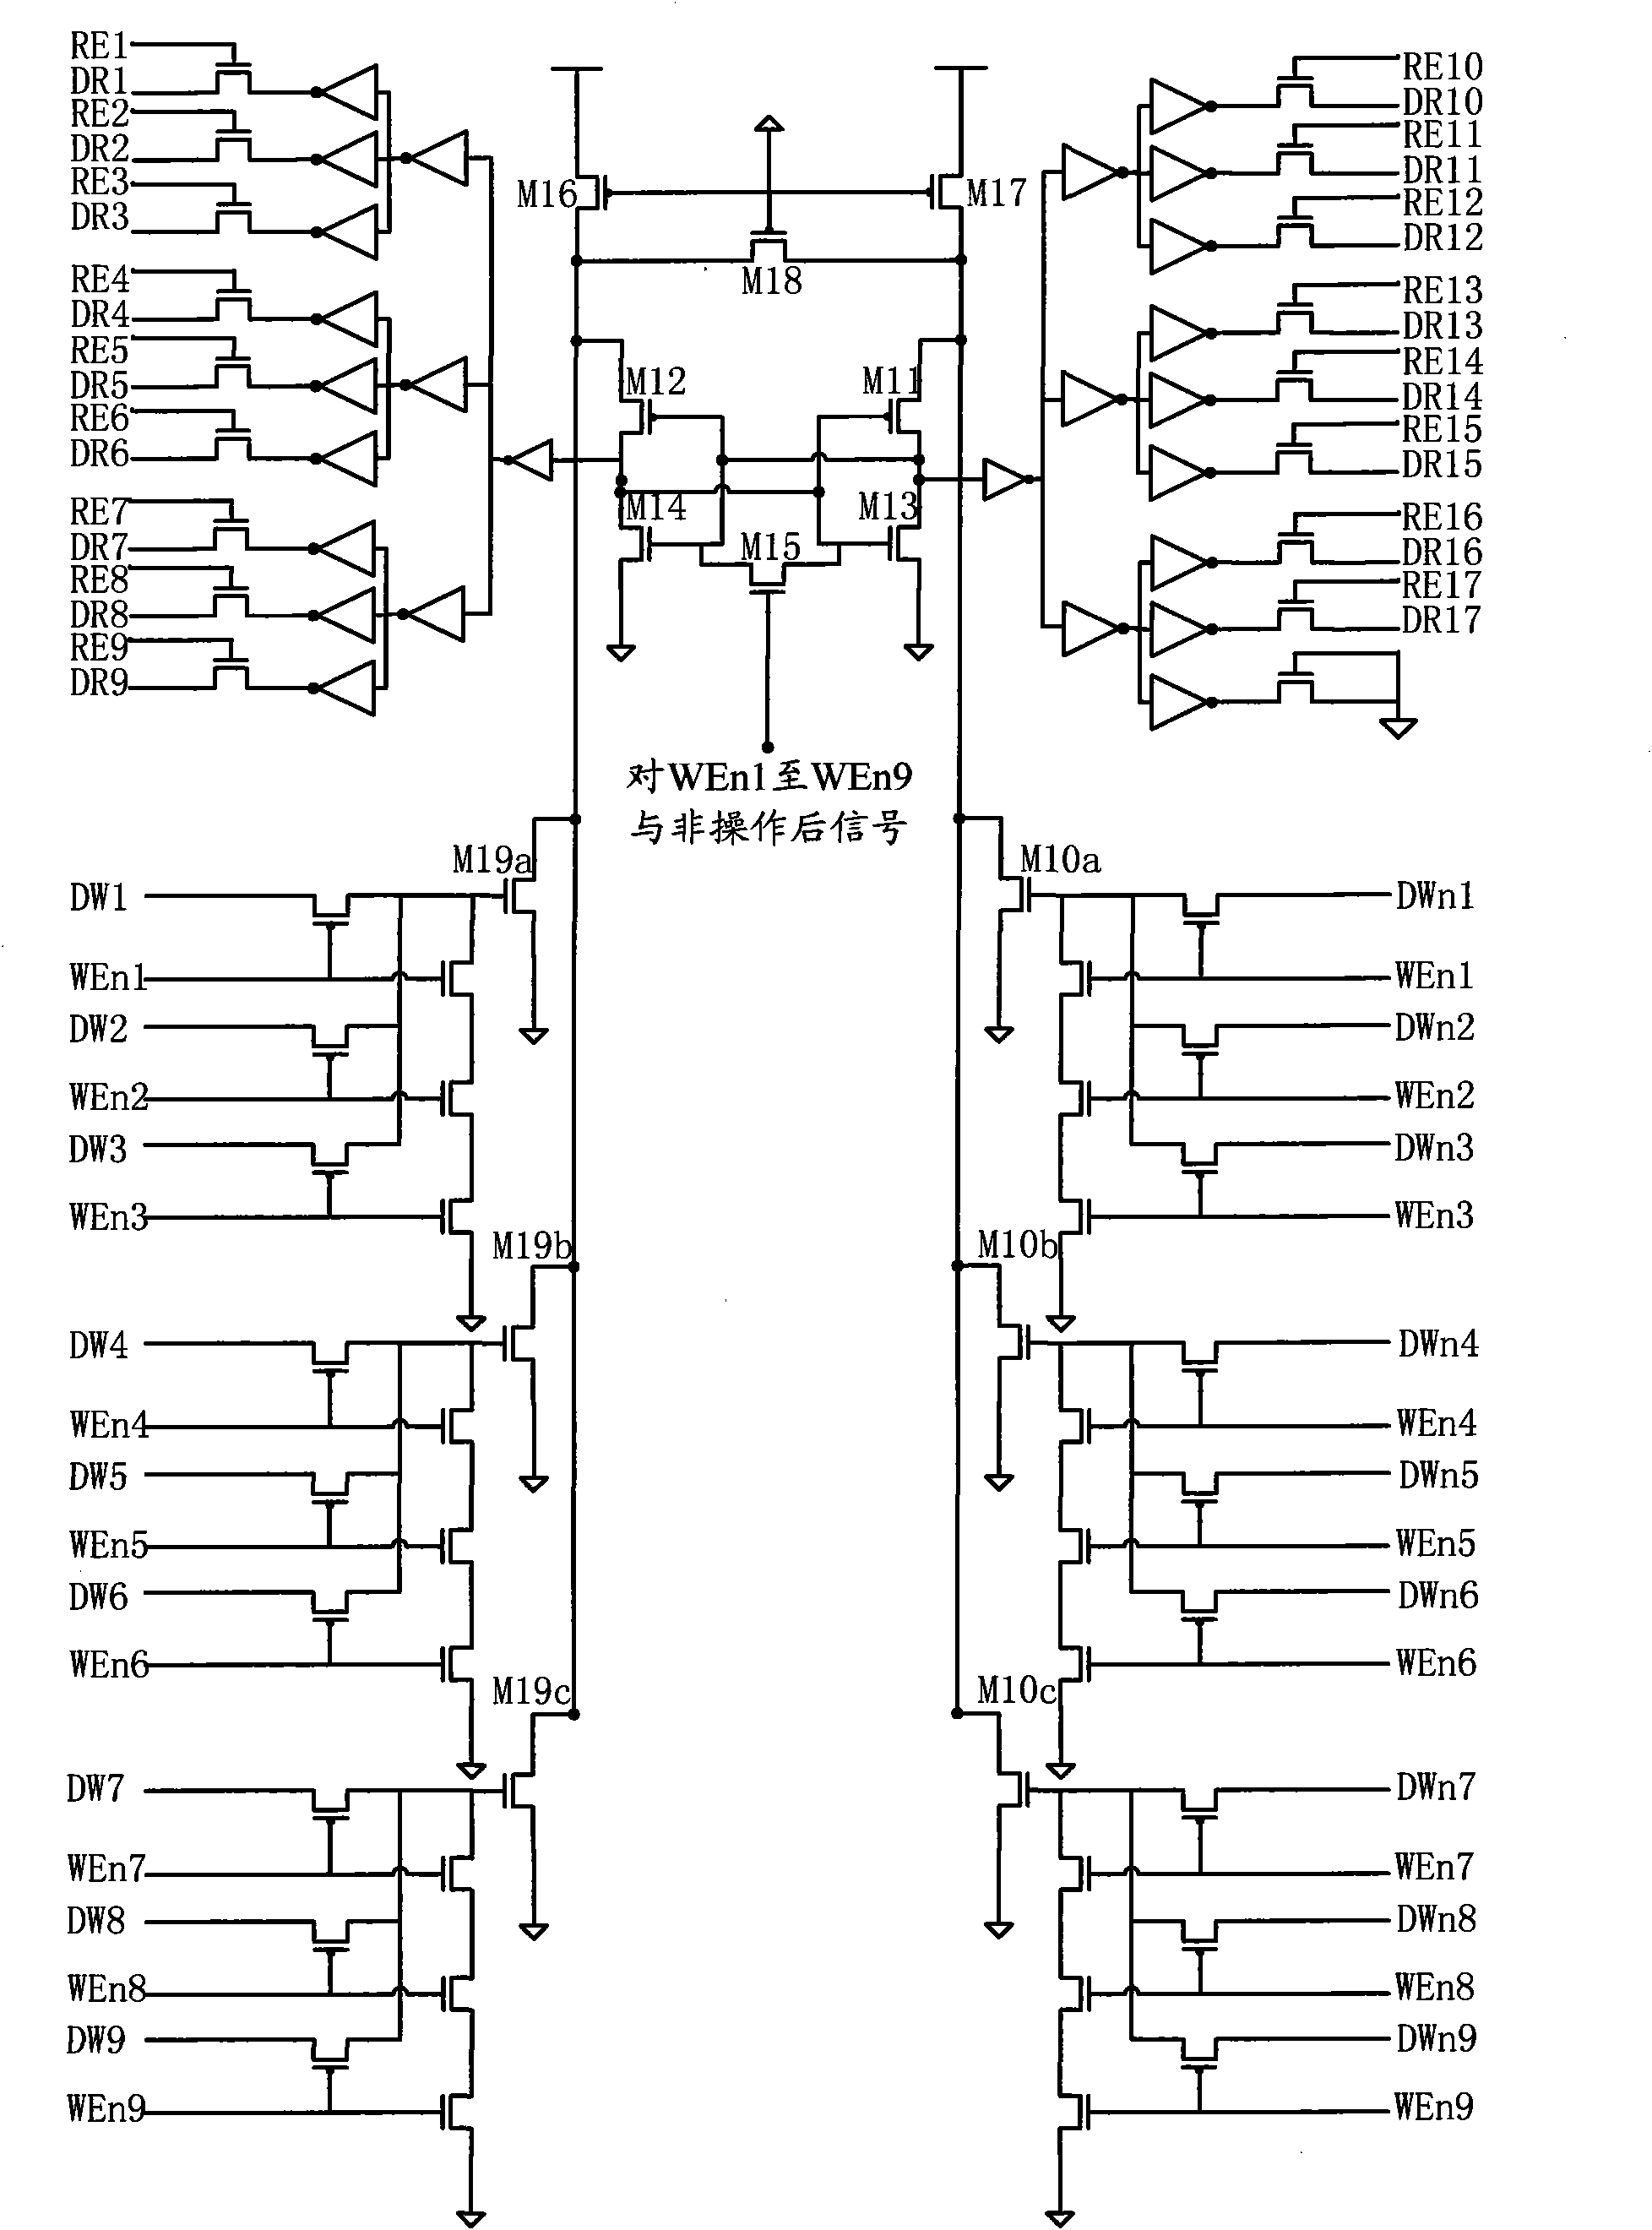 Multiport register file circuit